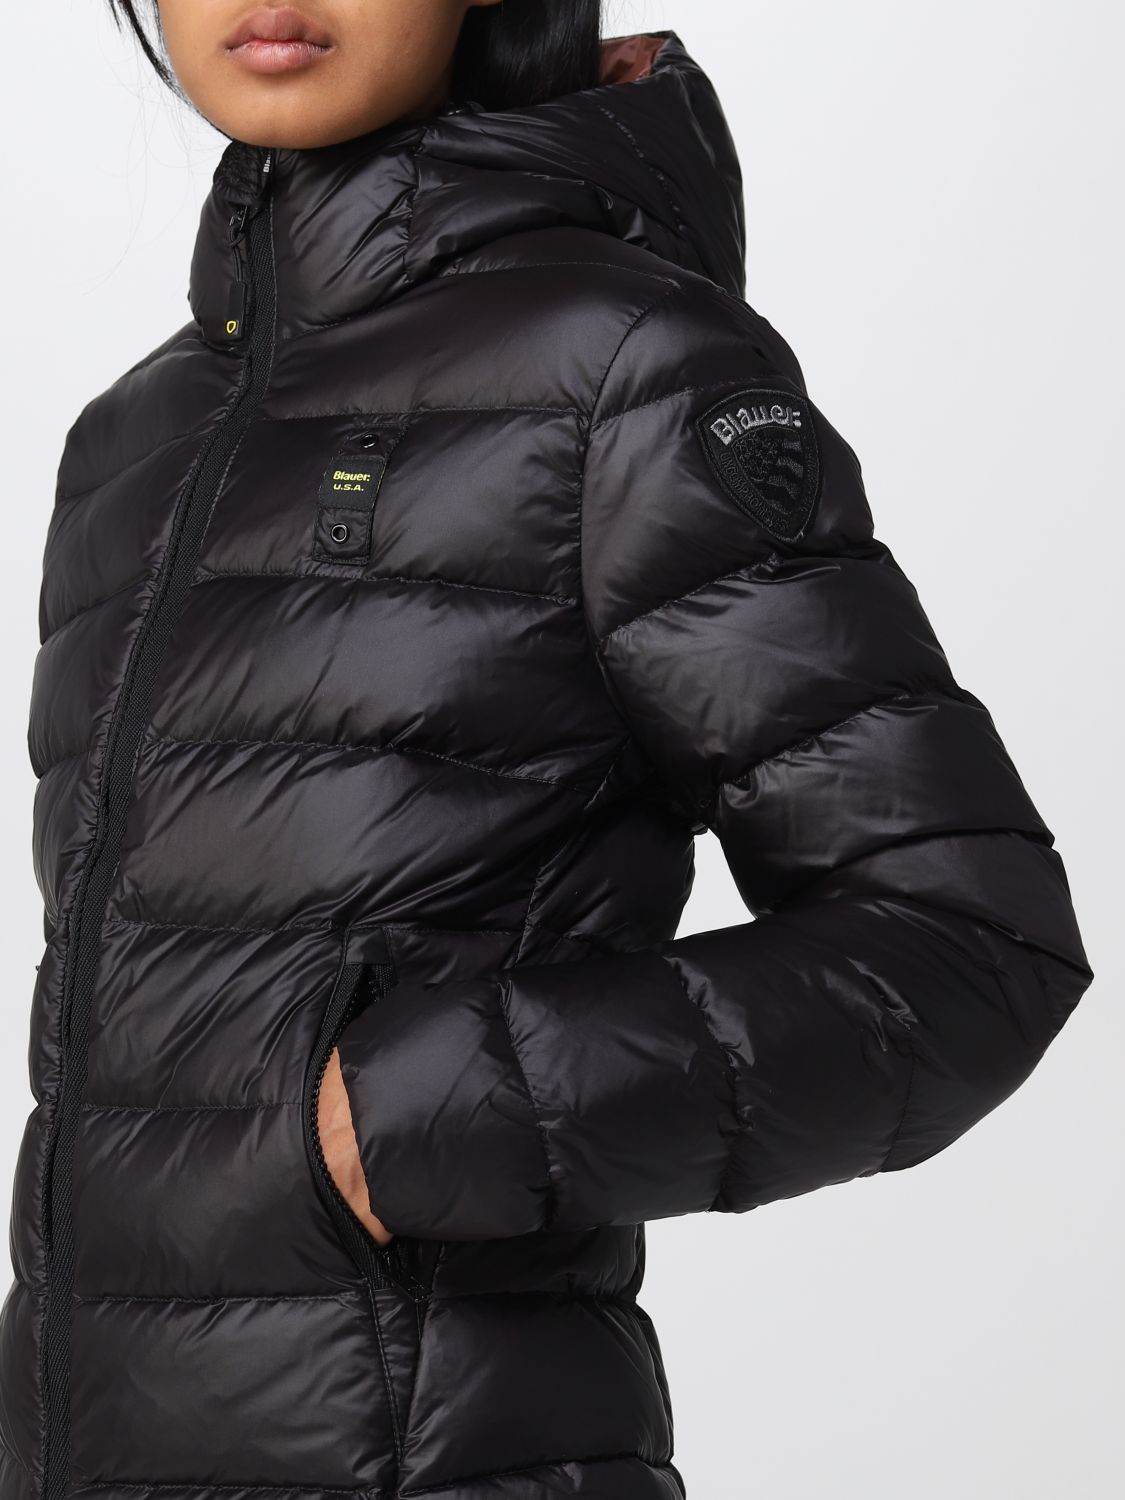 Caramelo Alentar siga adelante BLAUER: jacket for woman - Black | Blauer jacket 22WBLDC03020005050 online  on GIGLIO.COM